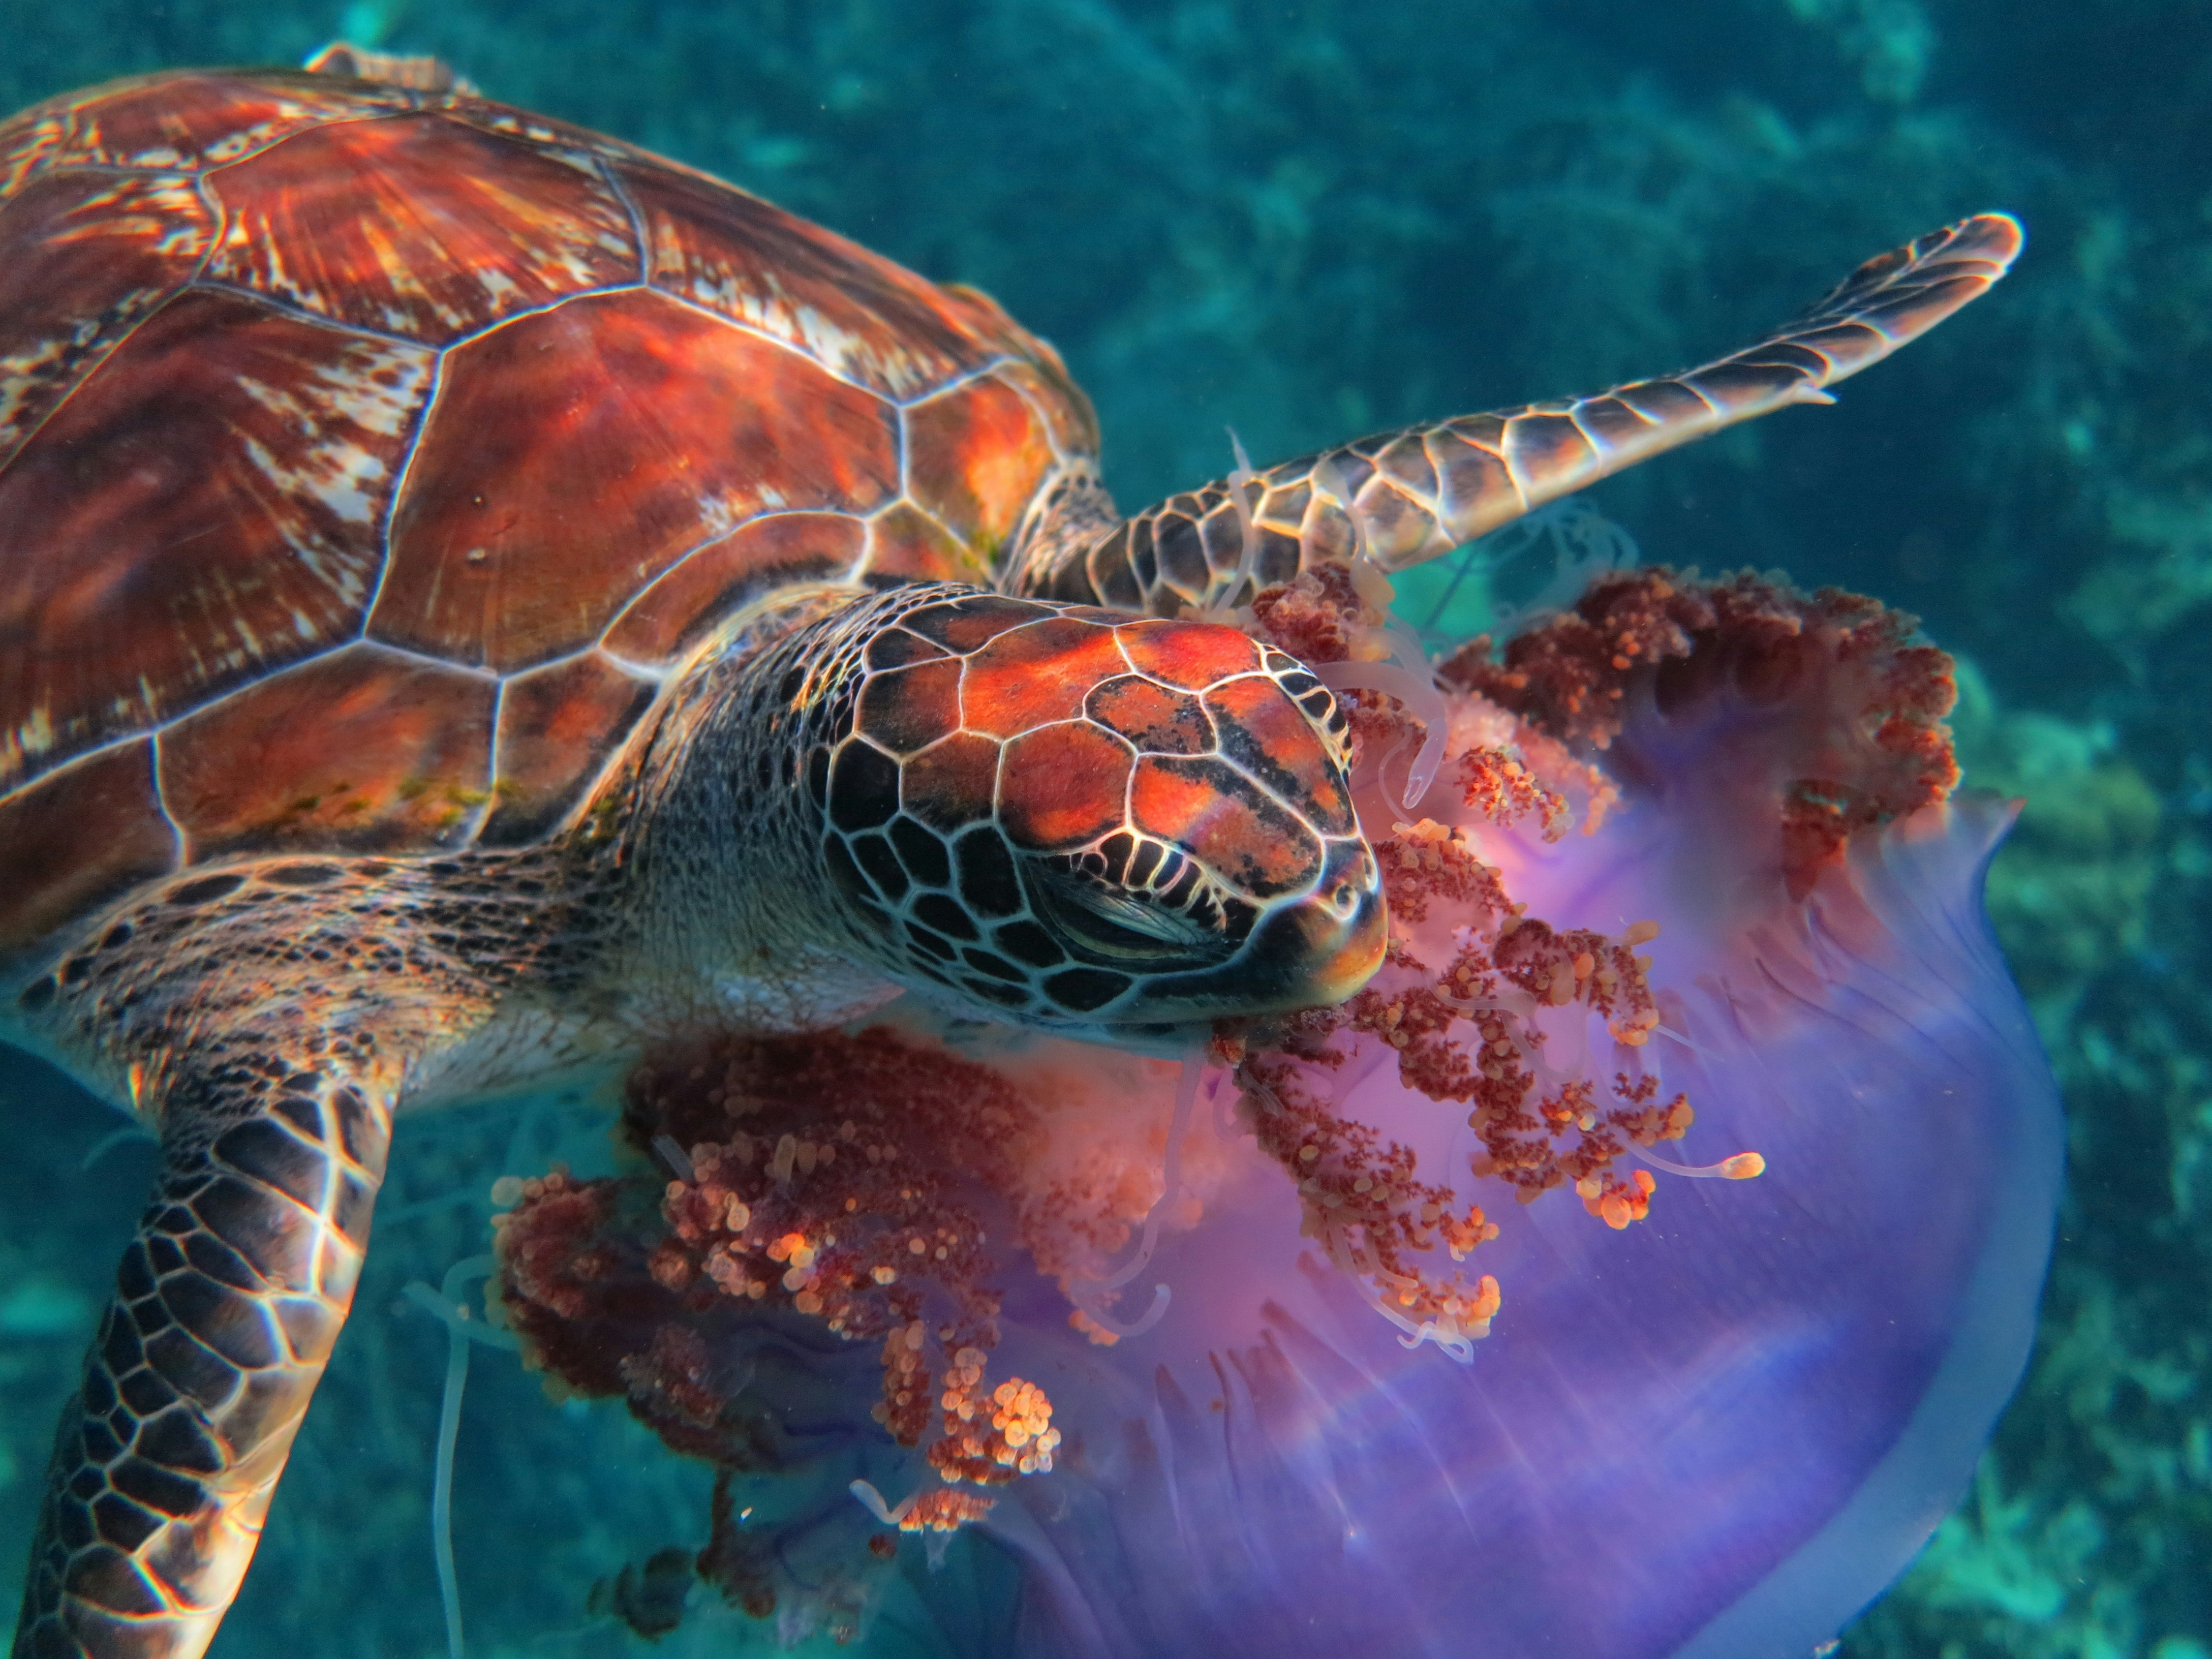 Turtles are the main predator of jellyfish.